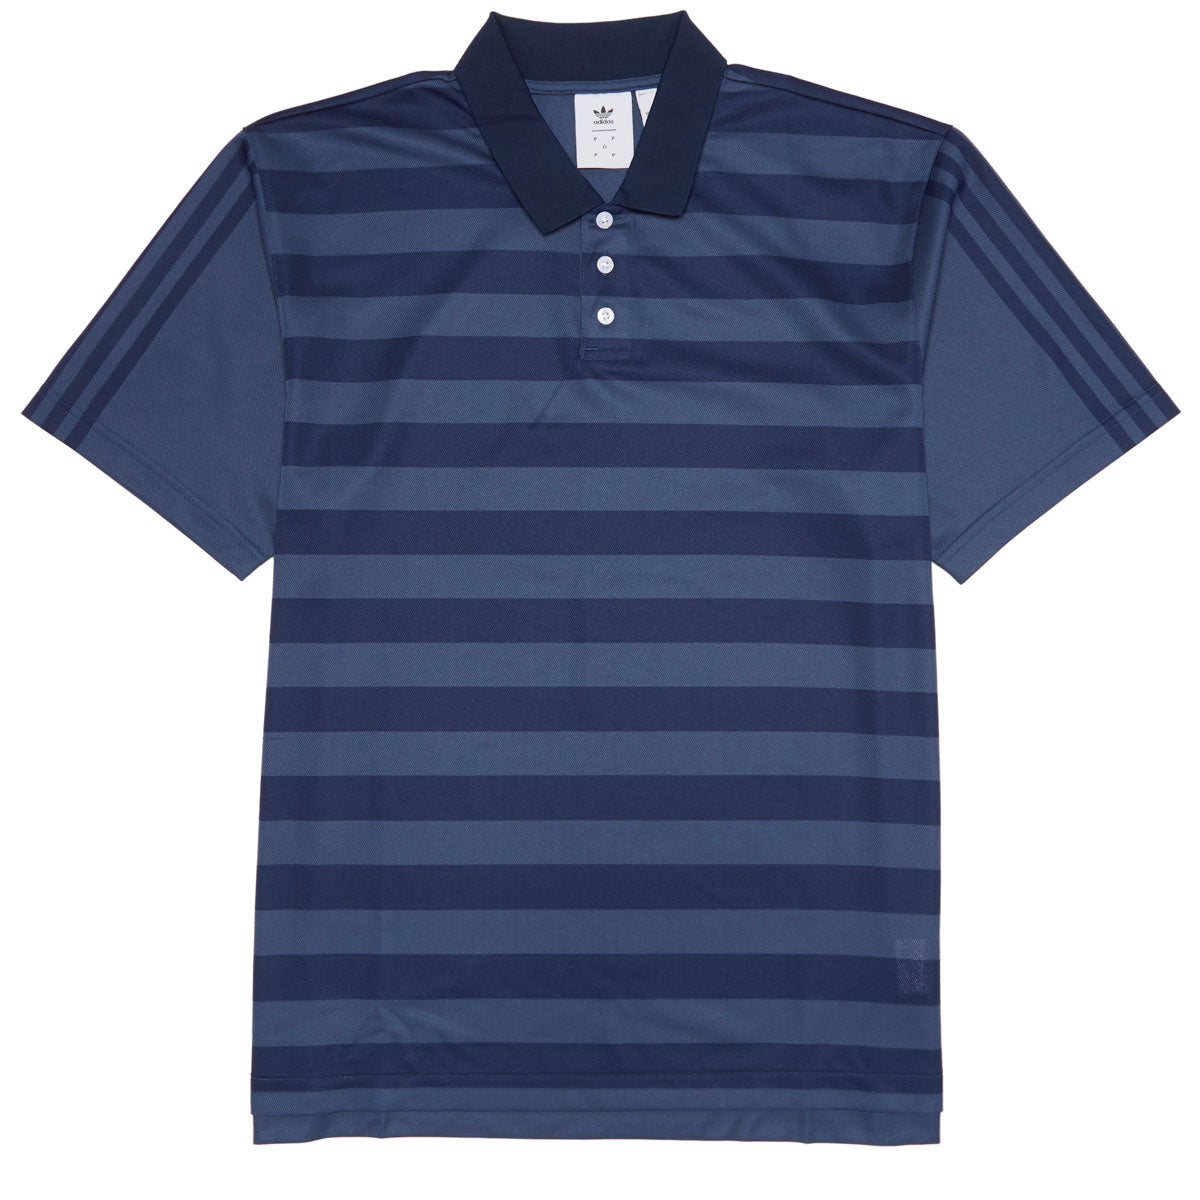 Adidas x Pop Trading Co Polo Shirt - Crew Navy/Collegiate Navy image 1